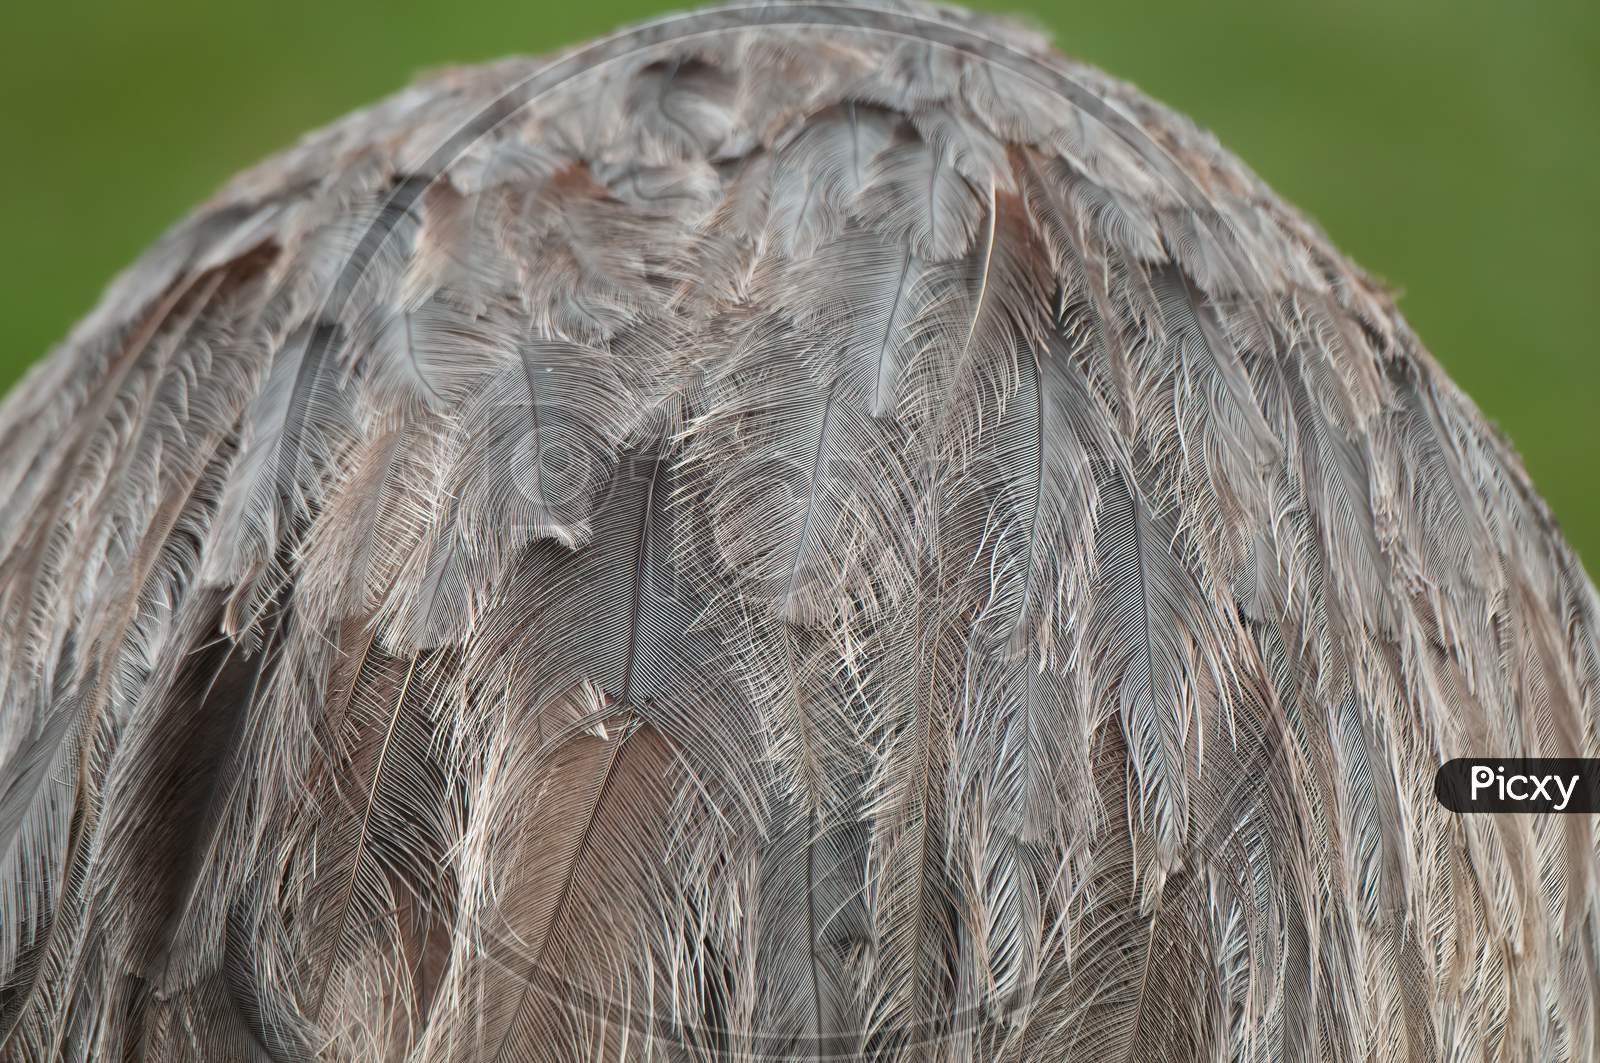 Feather Texture Of Emu, Dromaius Novaehollandiae,